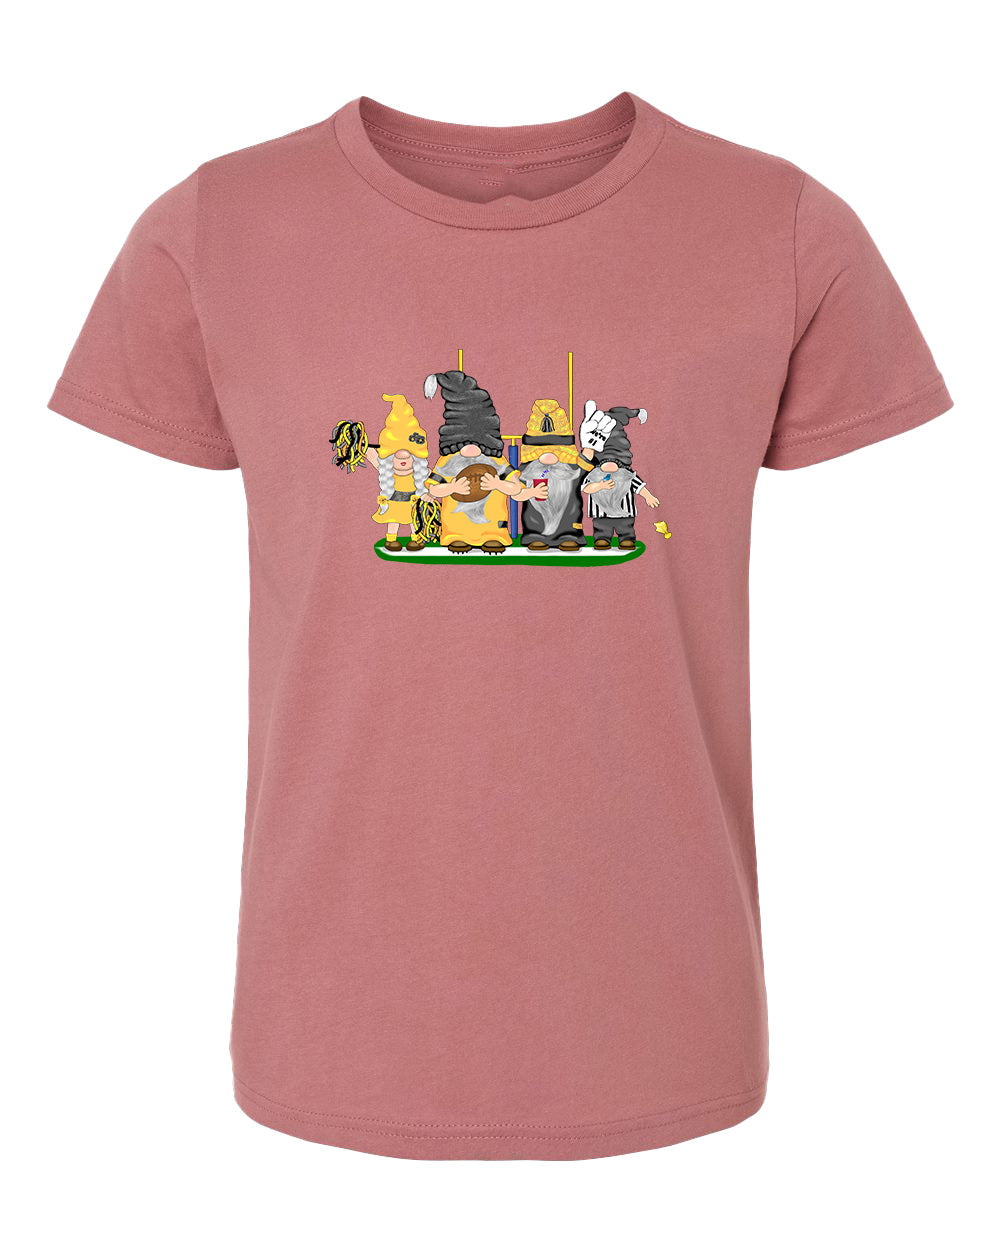 Black & Gold Football Gnomes  (similar to Pittsburgh) on Kids T-shirt